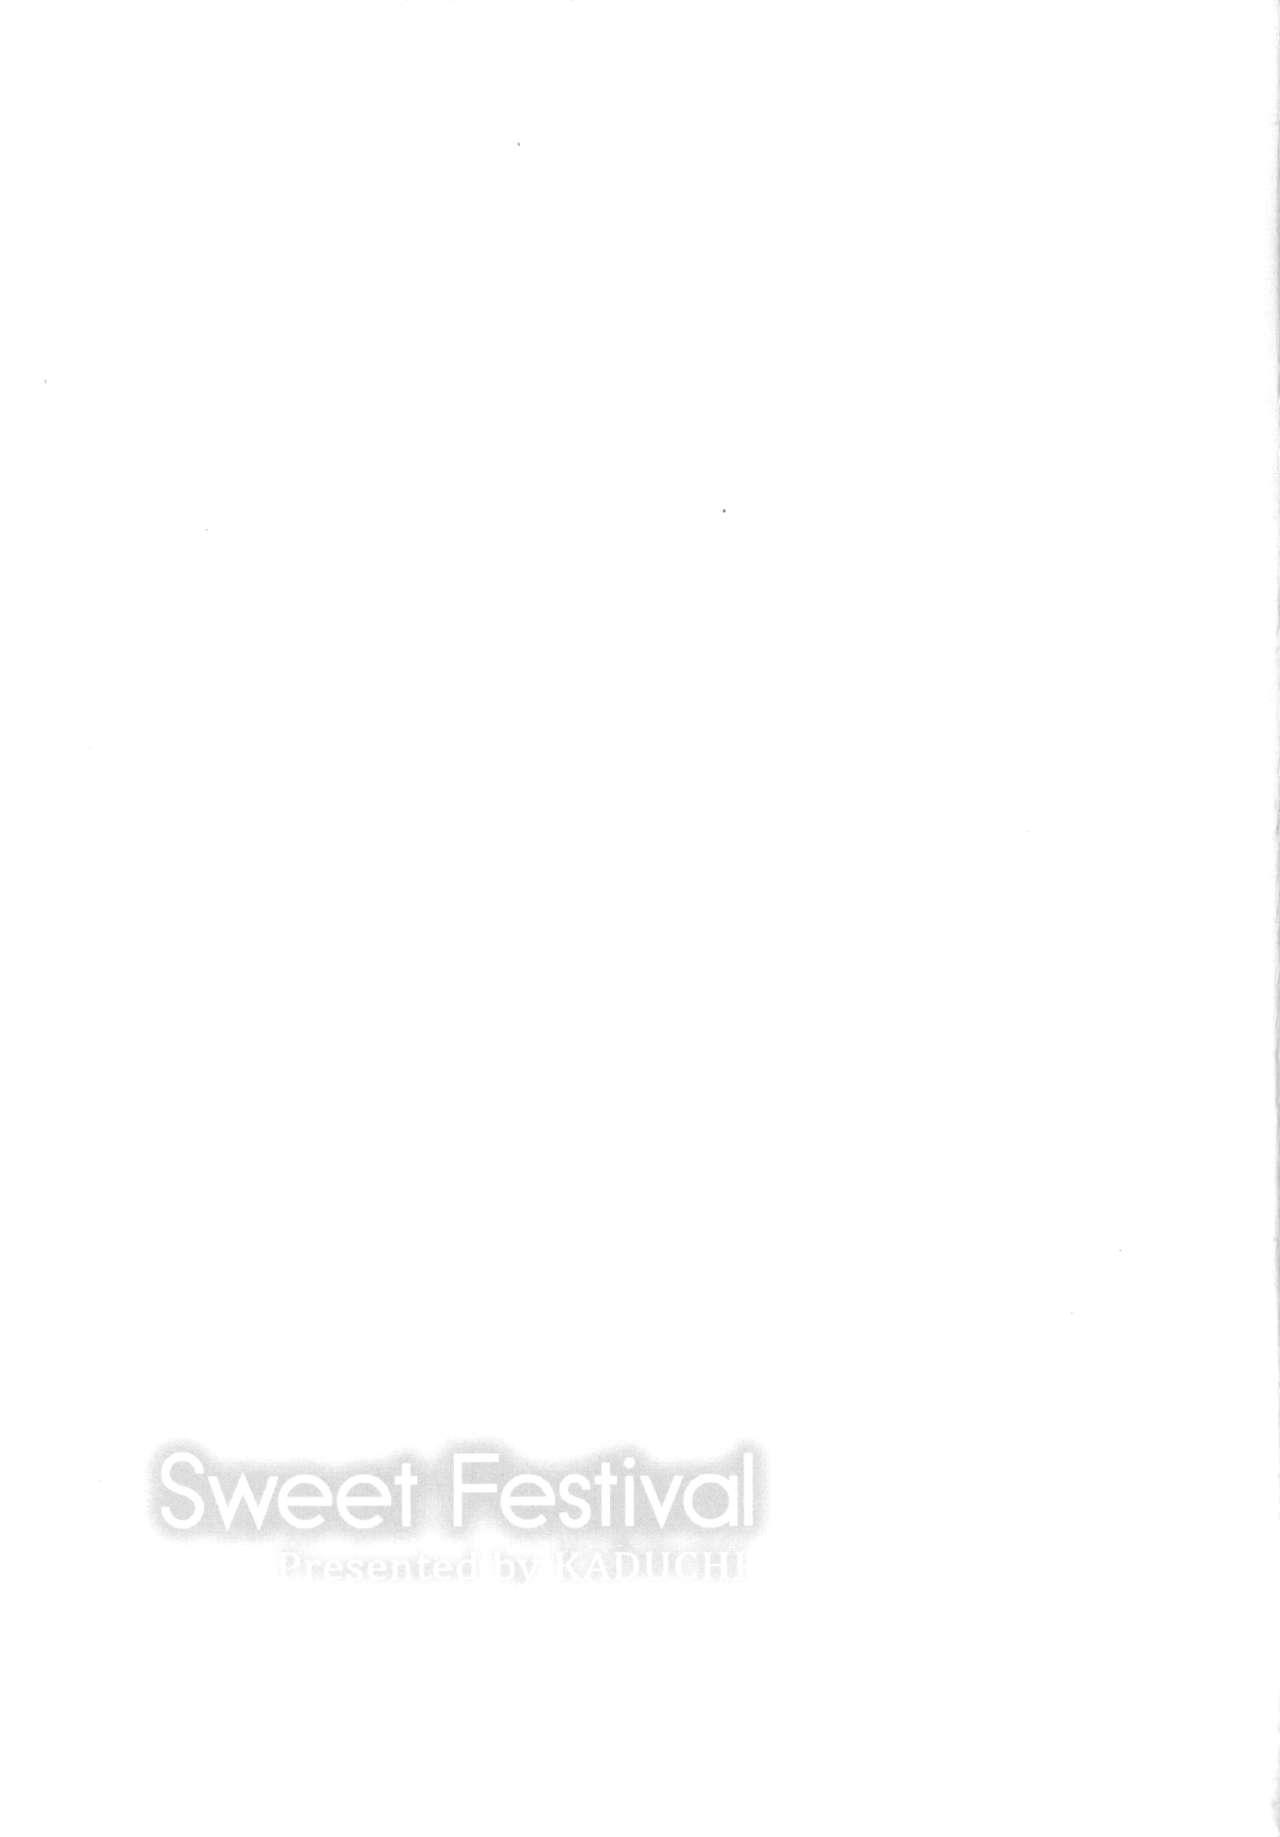 Sweet Festival 15